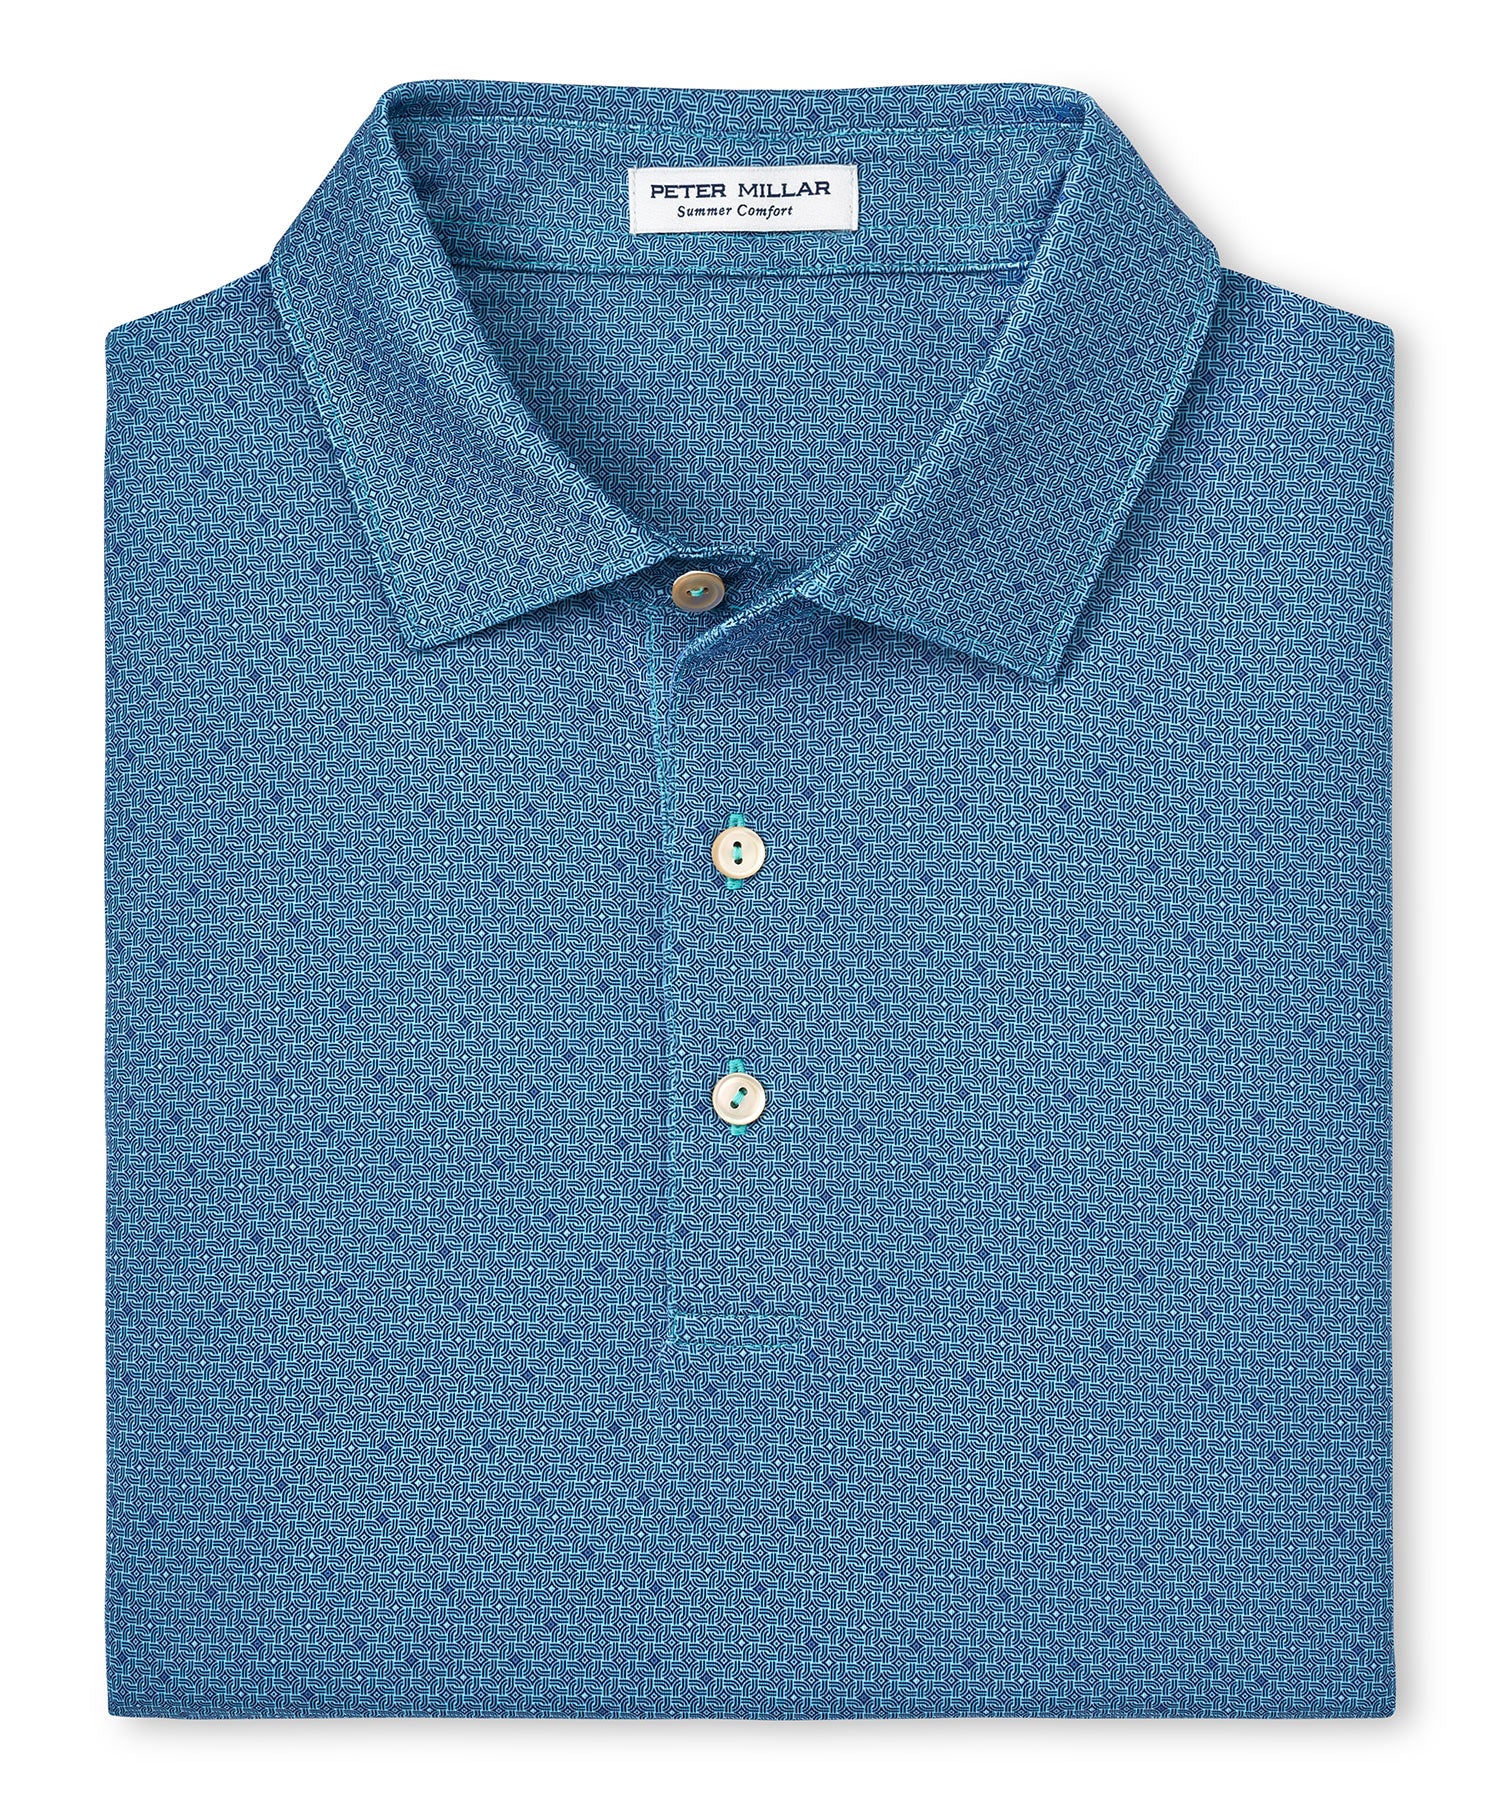 Peter Millar Short Sleeve Soriano Print Polo Knit Shirt, Men's Big & Tall